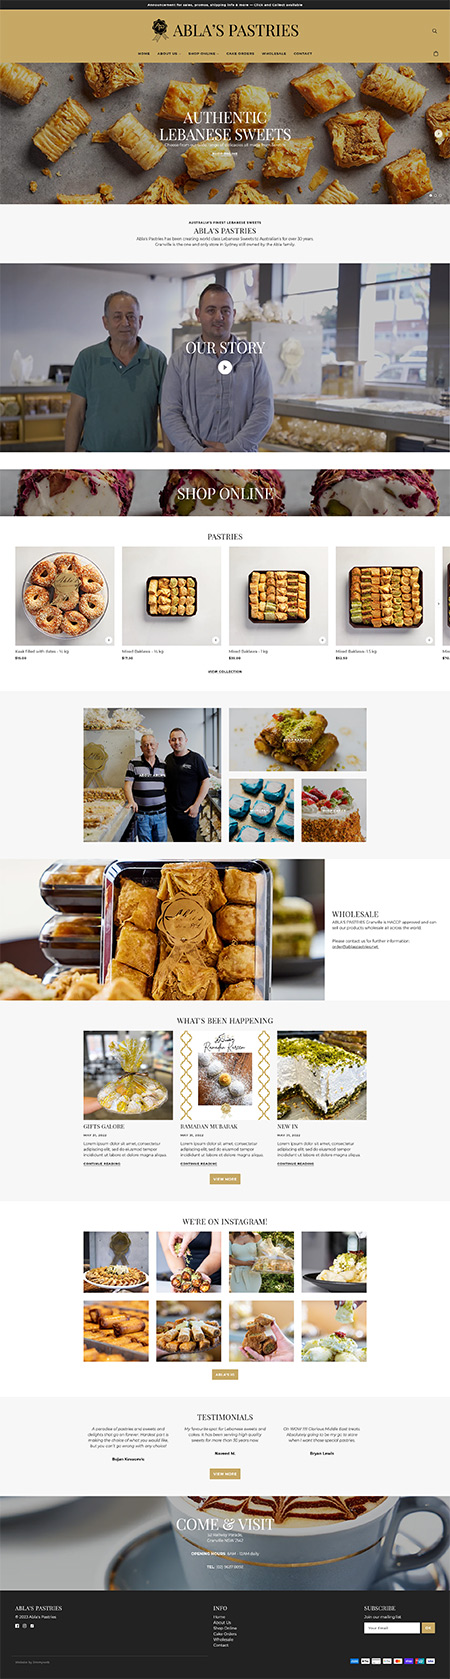 Ablas Pastries - Web Design Case Study